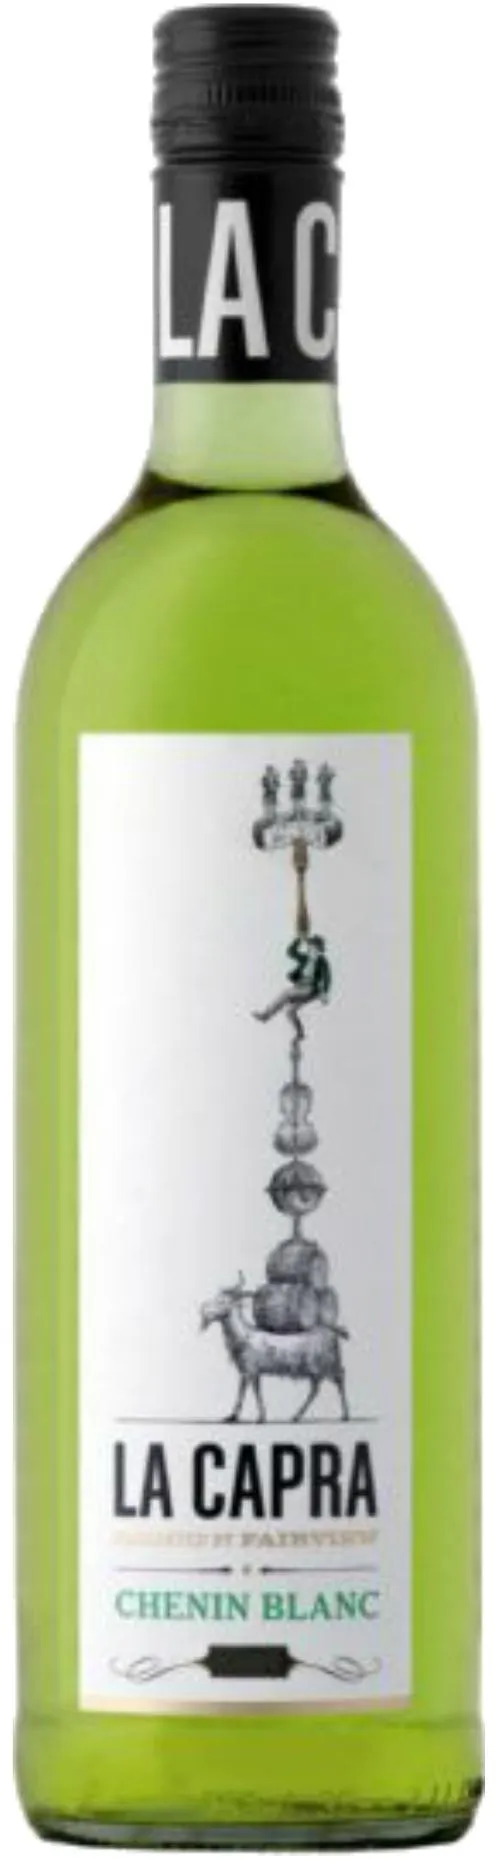 Bottle of Fairview La Capra Chenin Blanc from search results